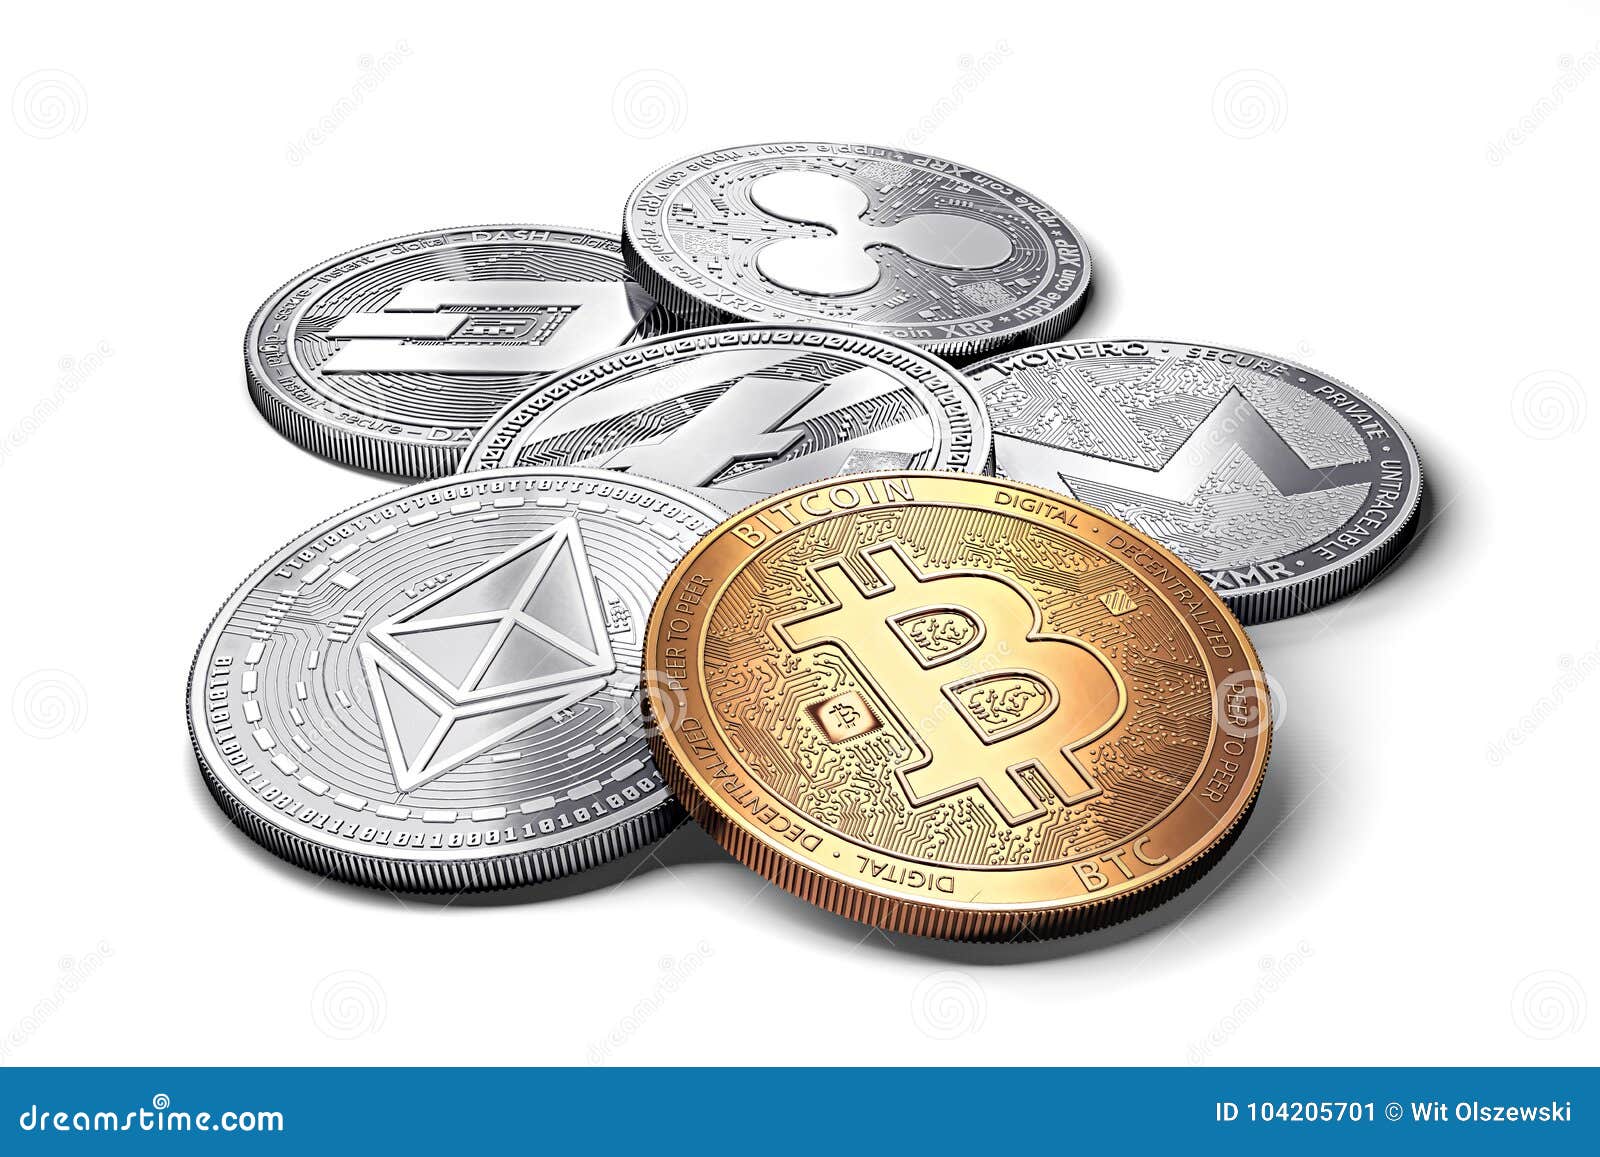 Bitcoin vs. Litecoin, Ethereum, Ripple, and Dash - Bitcoin Market Journal